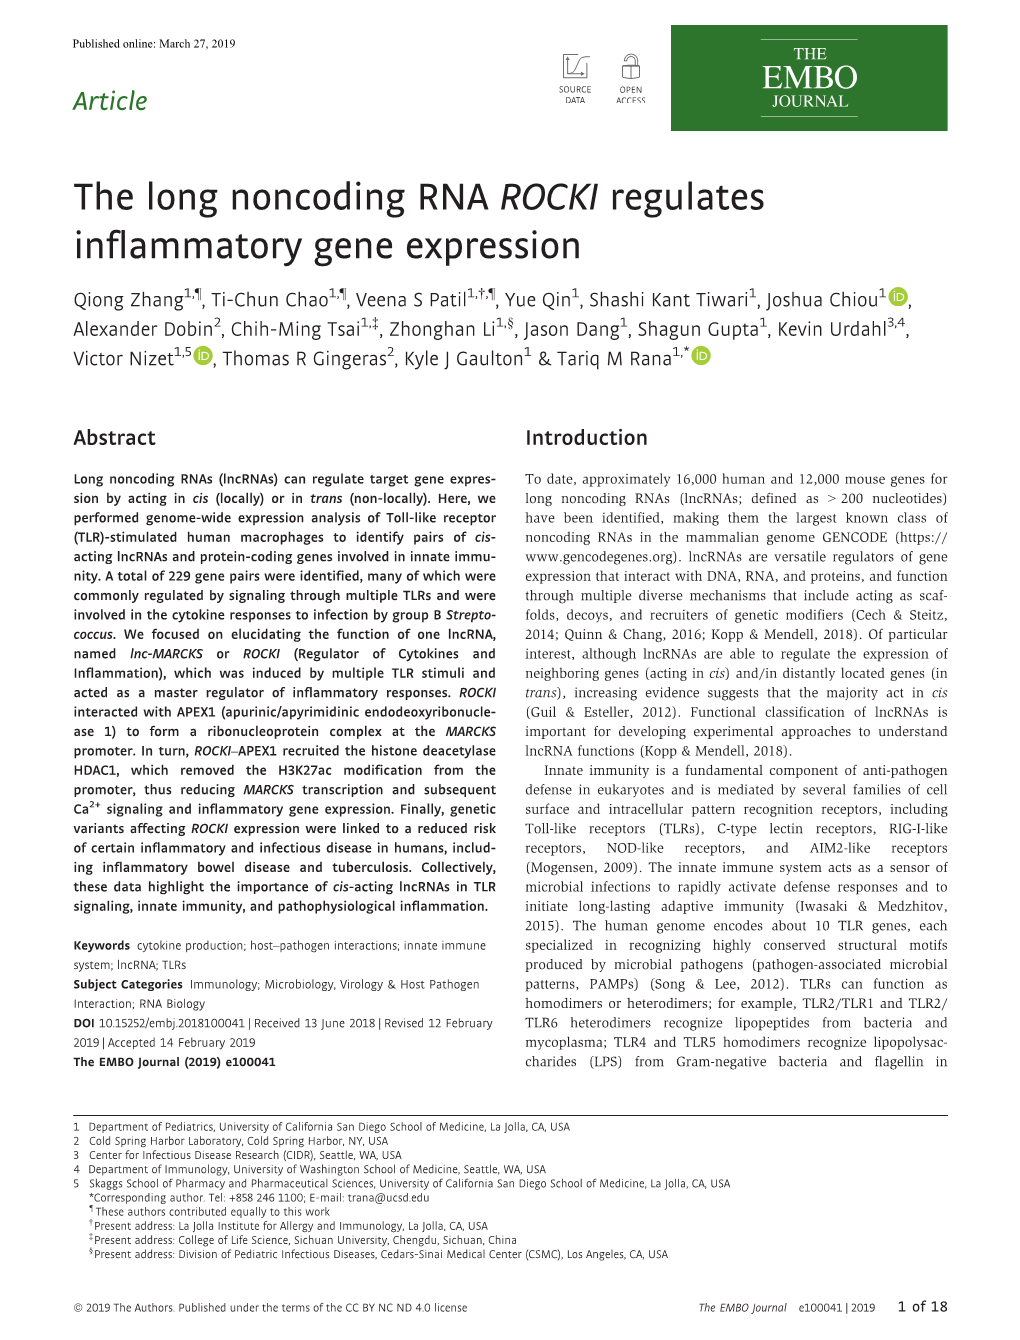 The Long Noncoding RNA ROCKI Regulates Inflammatory Gene Expression